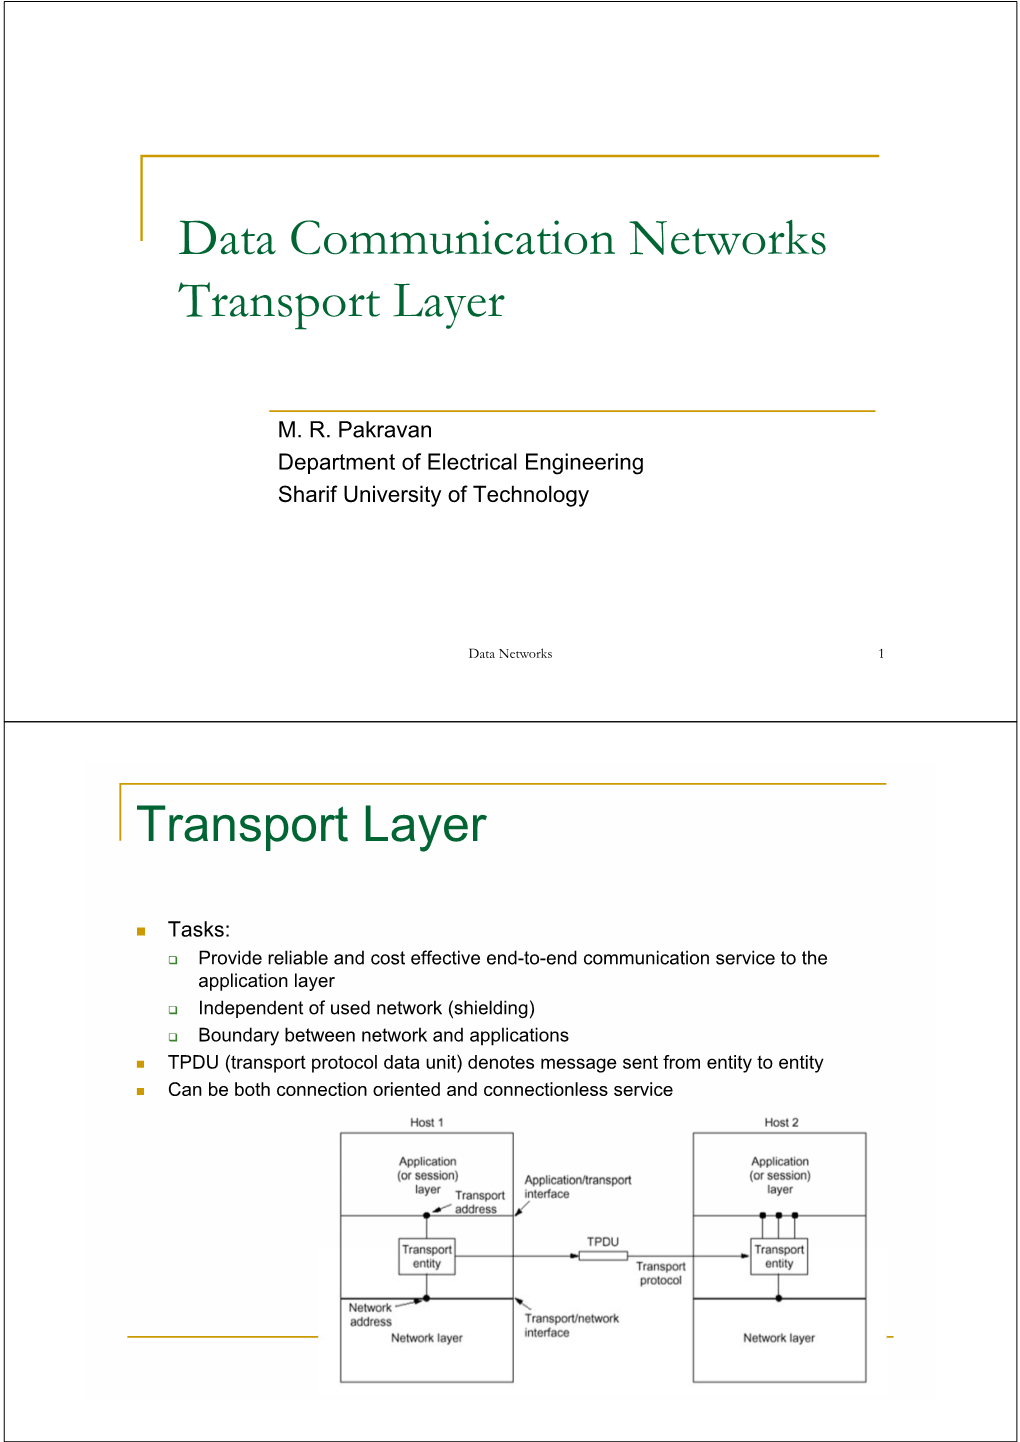 Data Communication Networks Transport Layer